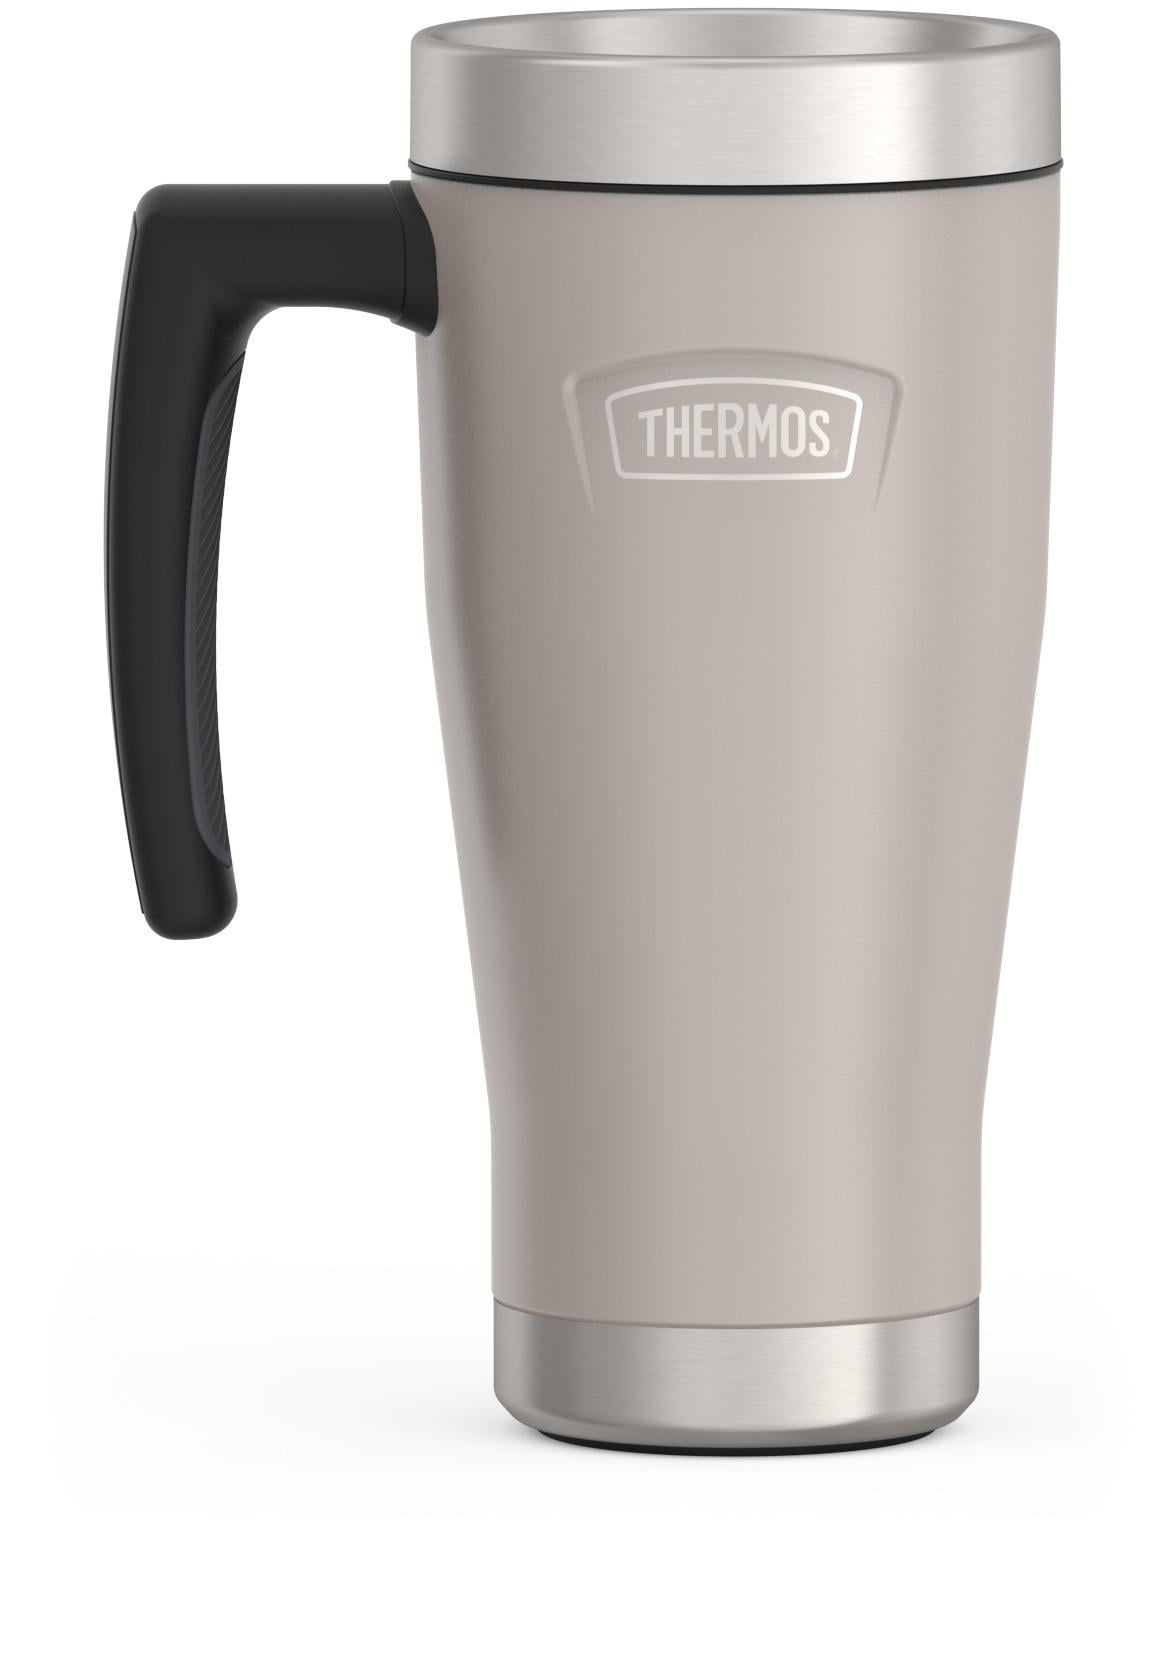 Thermos ICON Series Stainless Steel Vacuum Insulated Mug, 16oz, Granite